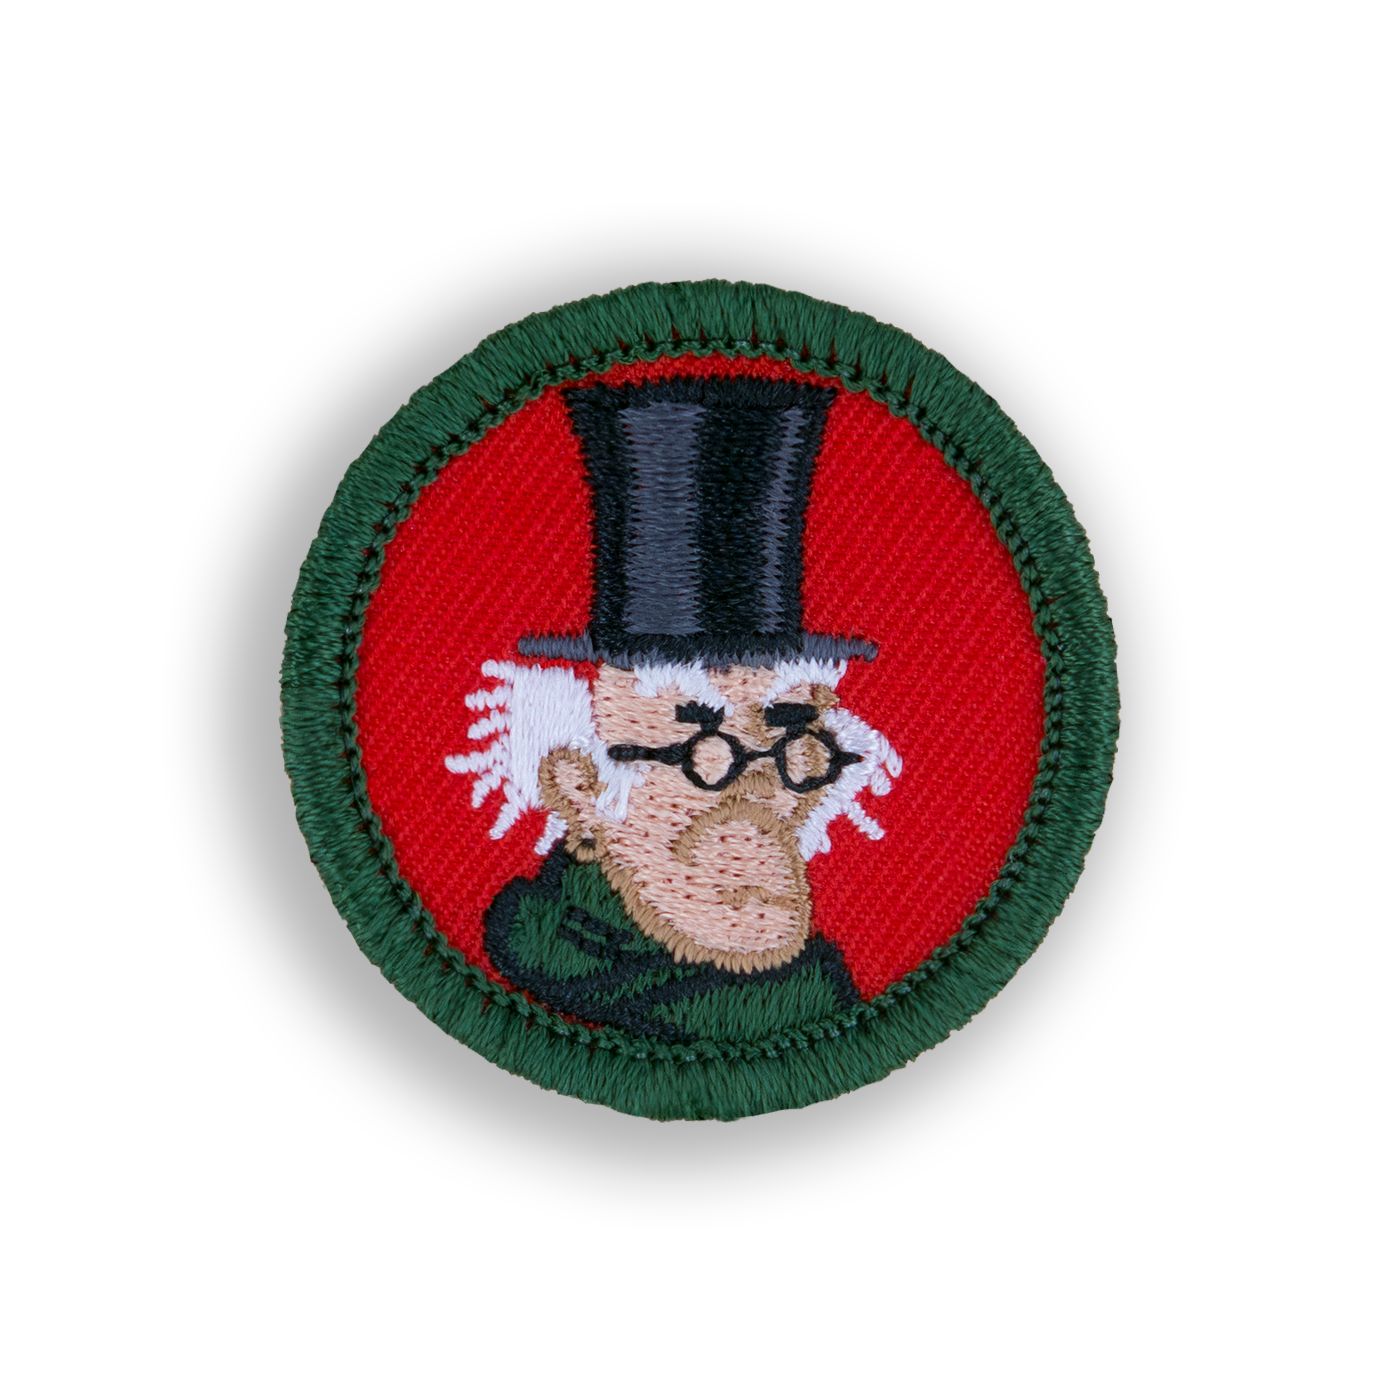 Scrooge Patch | Demerit Wear - Fake Merit Badges